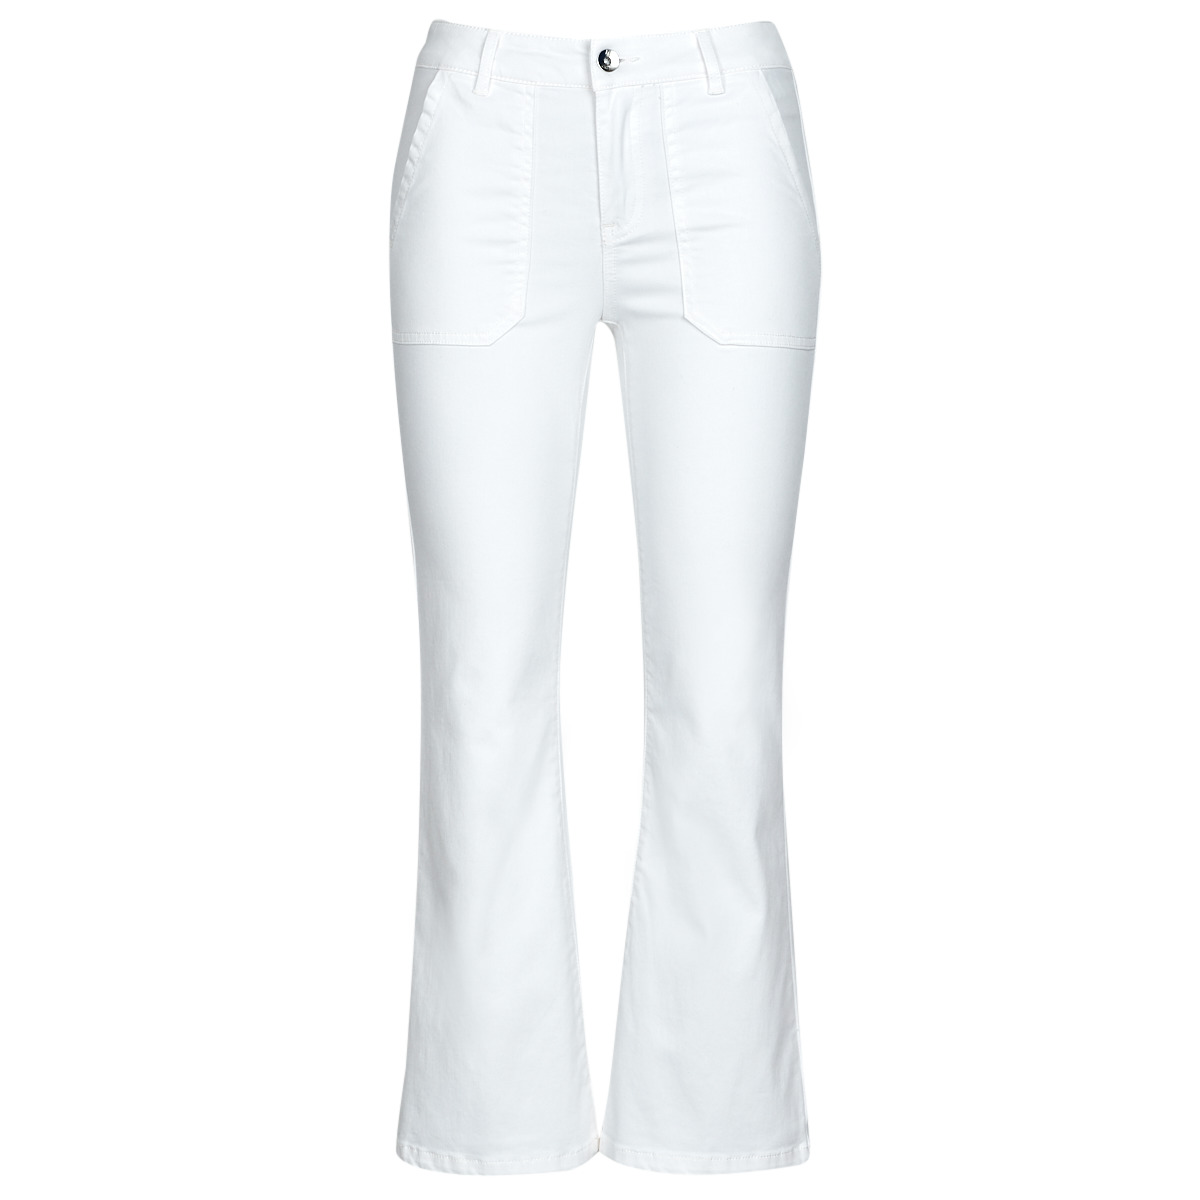 Textil Ženy Jeans široký střih Les Petites Bombes FAYE Bílá